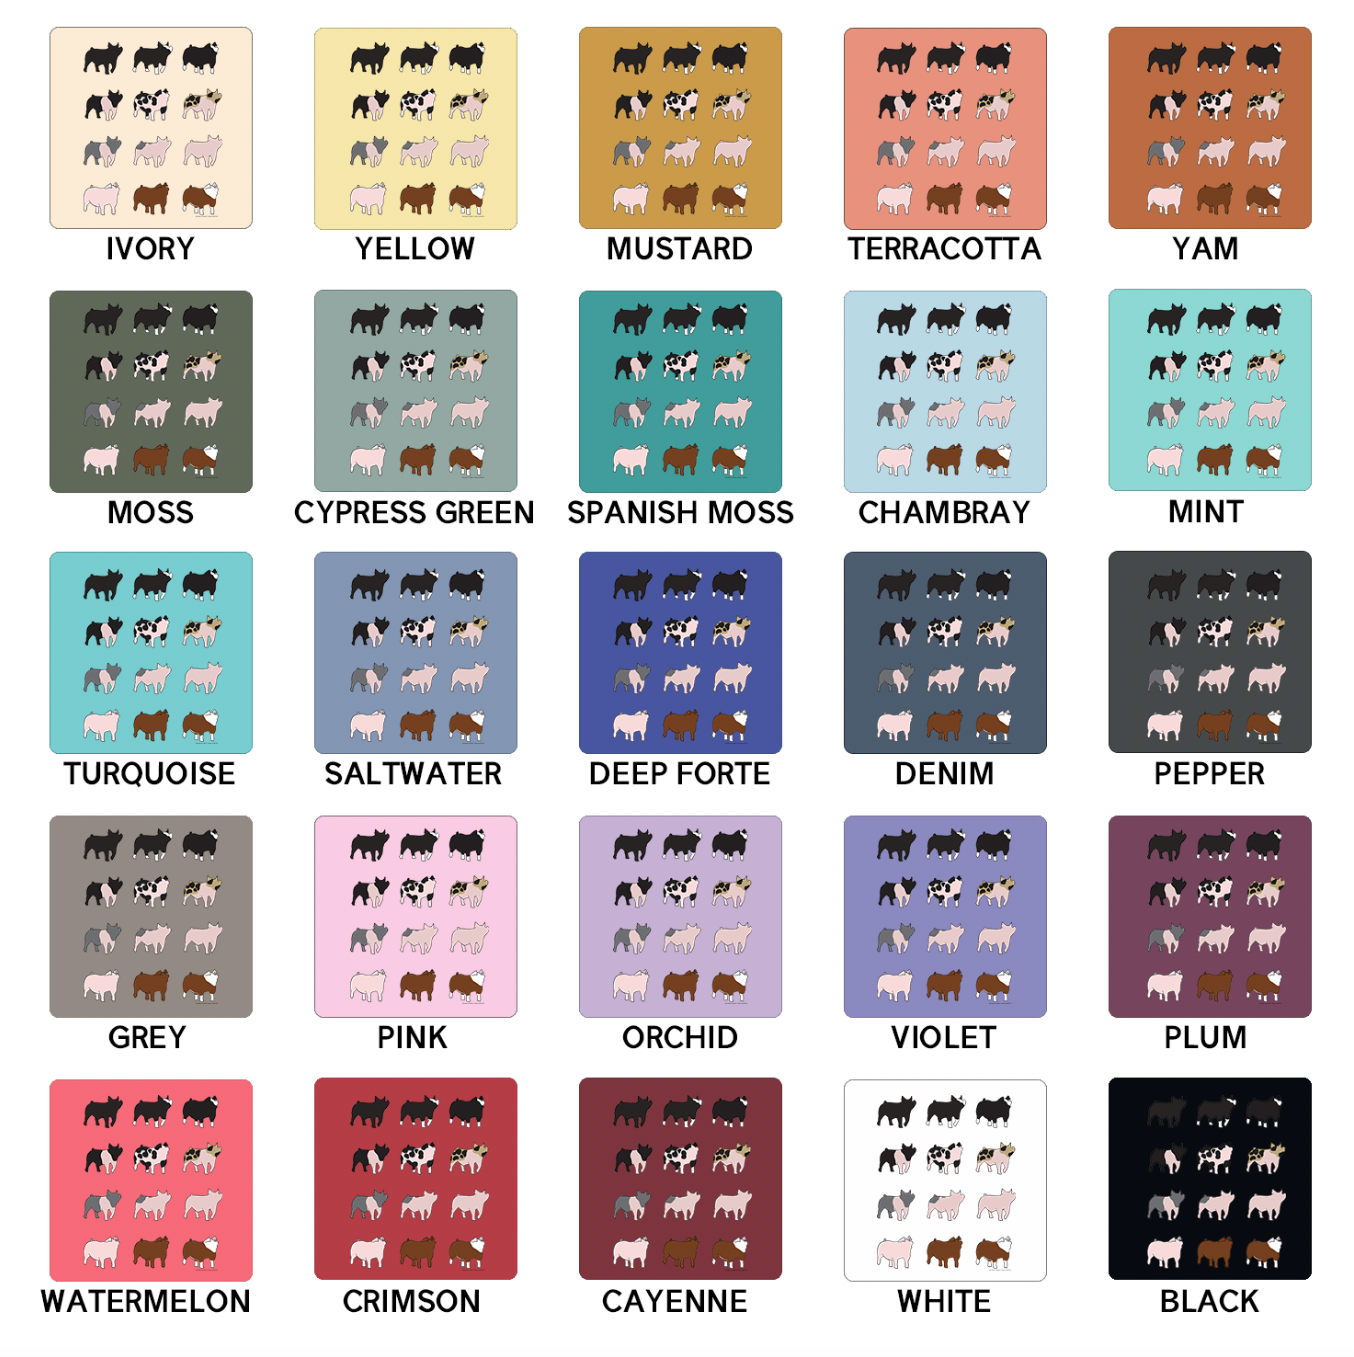 Pig Breeds ComfortWash/ComfortColor T-Shirt (S-4XL) - Multiple Colors!